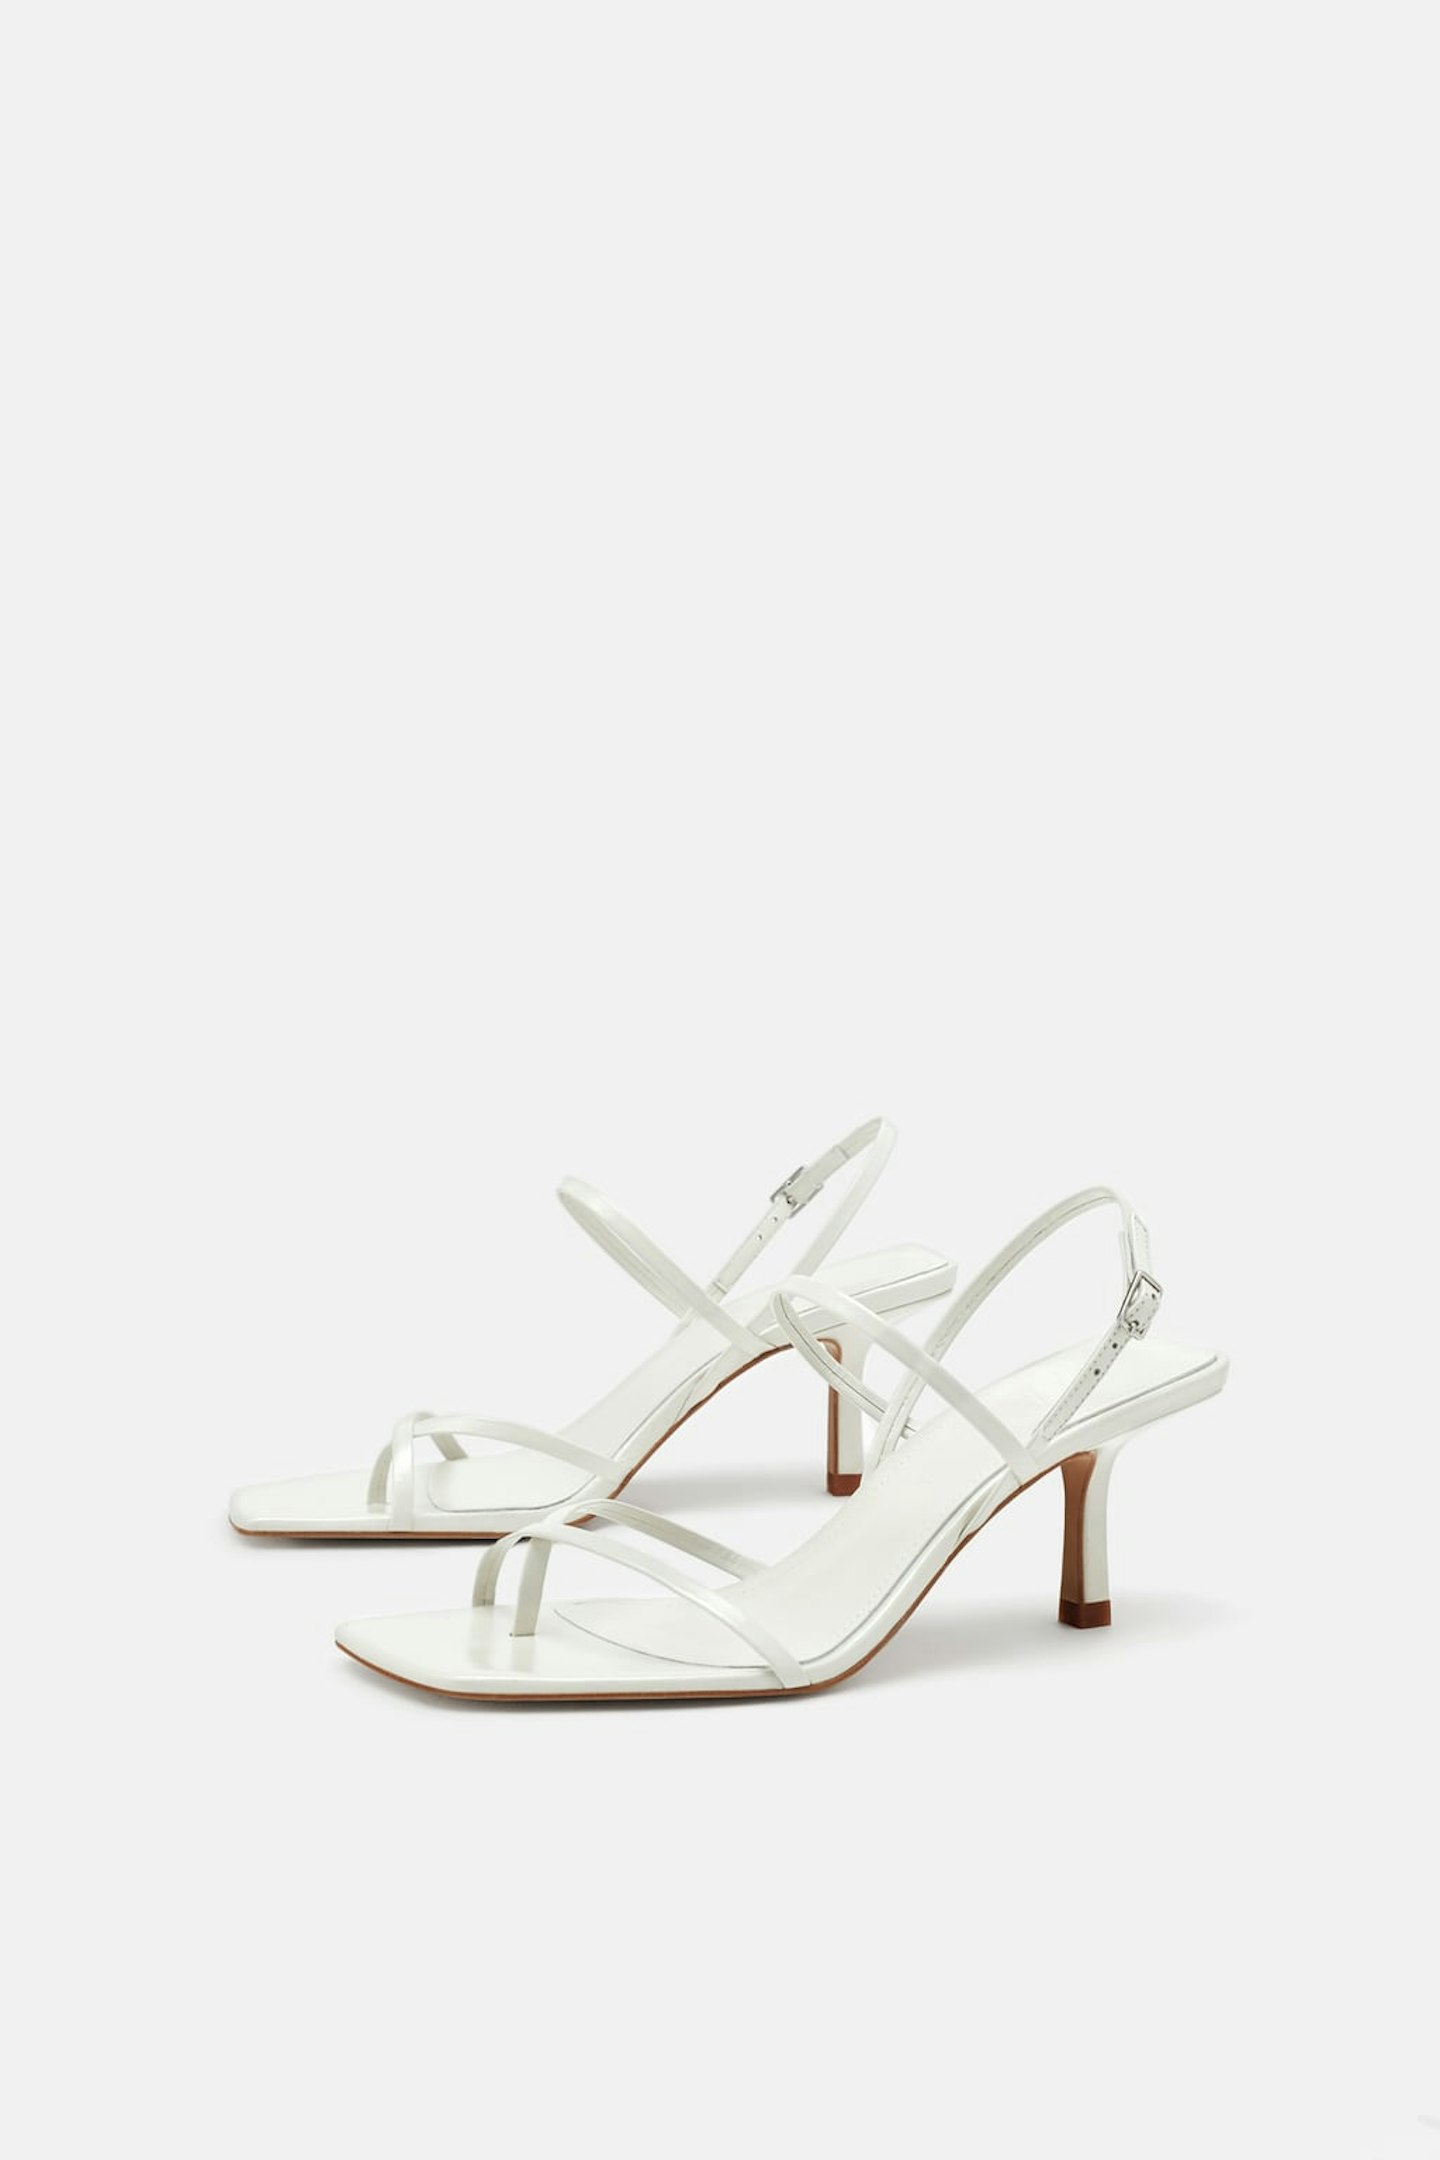 Zara, White Low Heel Sandals, £55.99